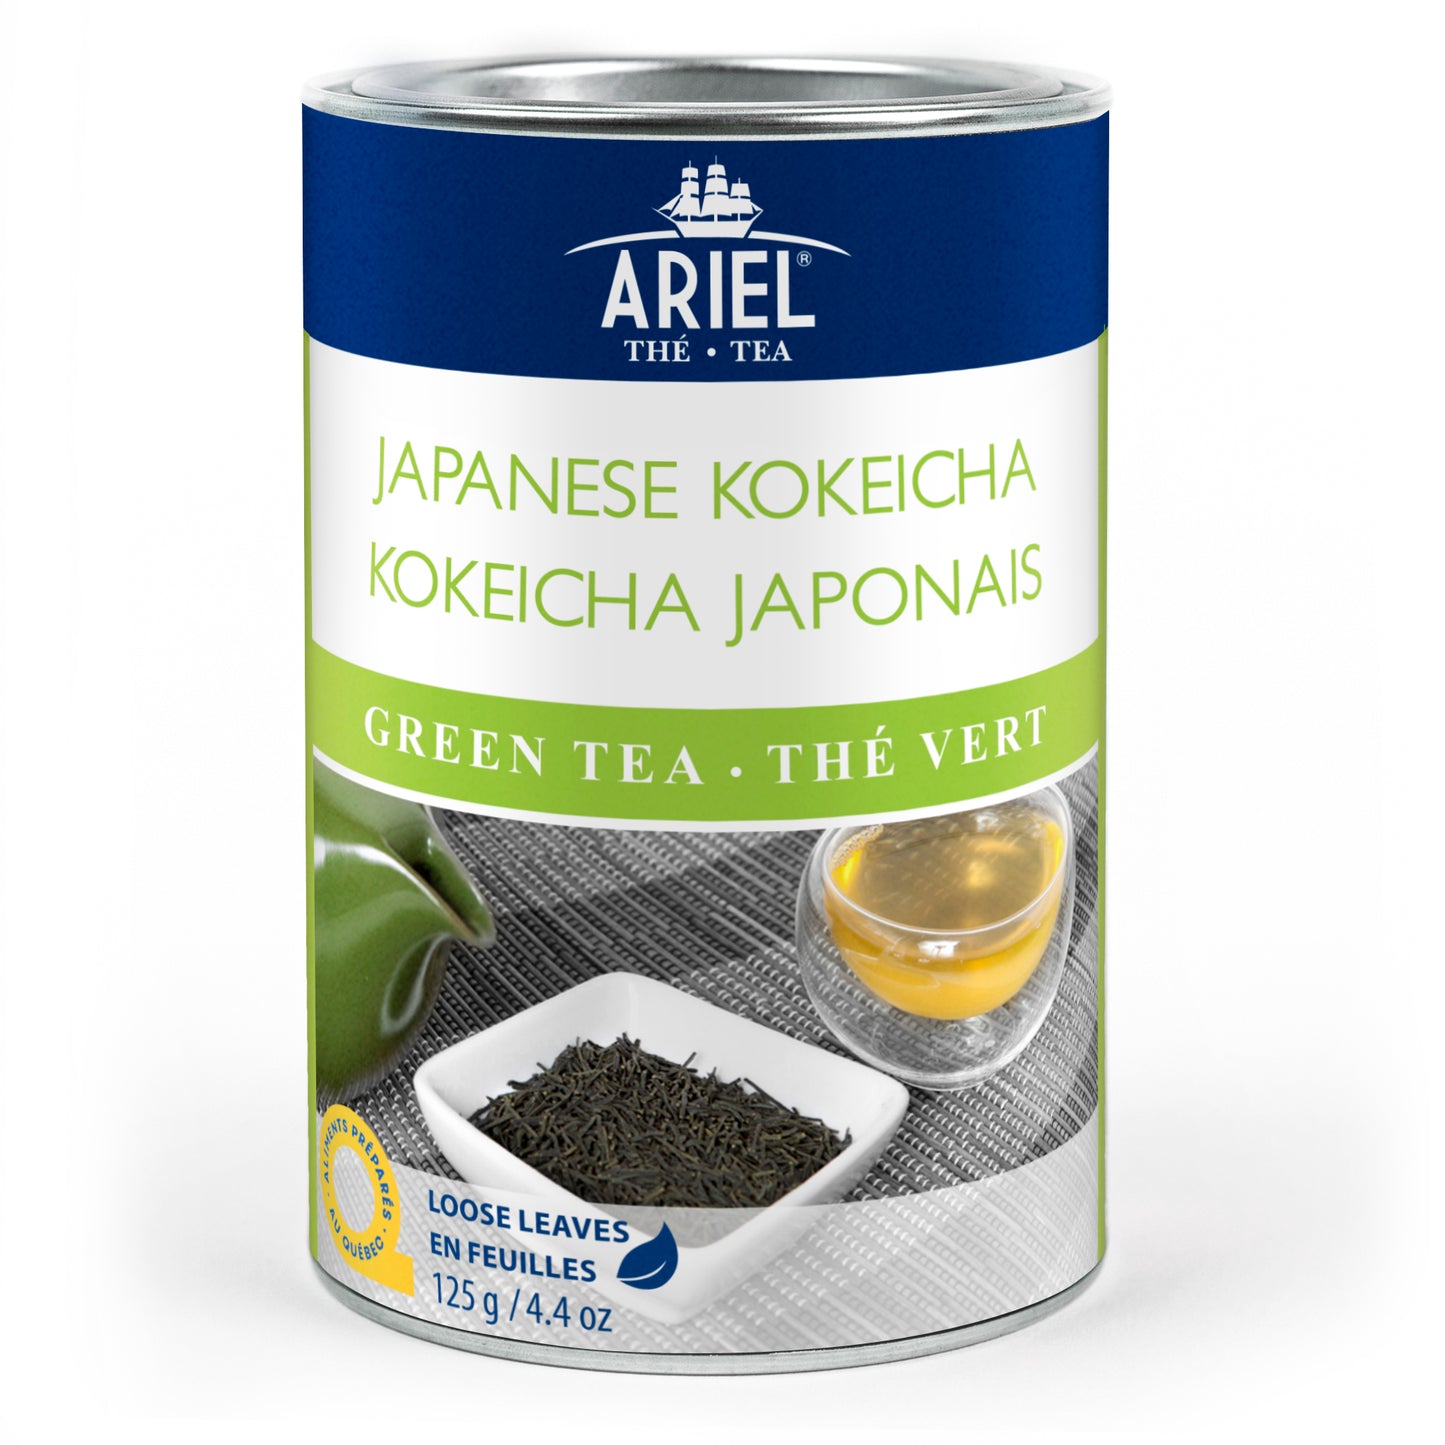 JAPANESE KOKEICHA - GREEN TEA